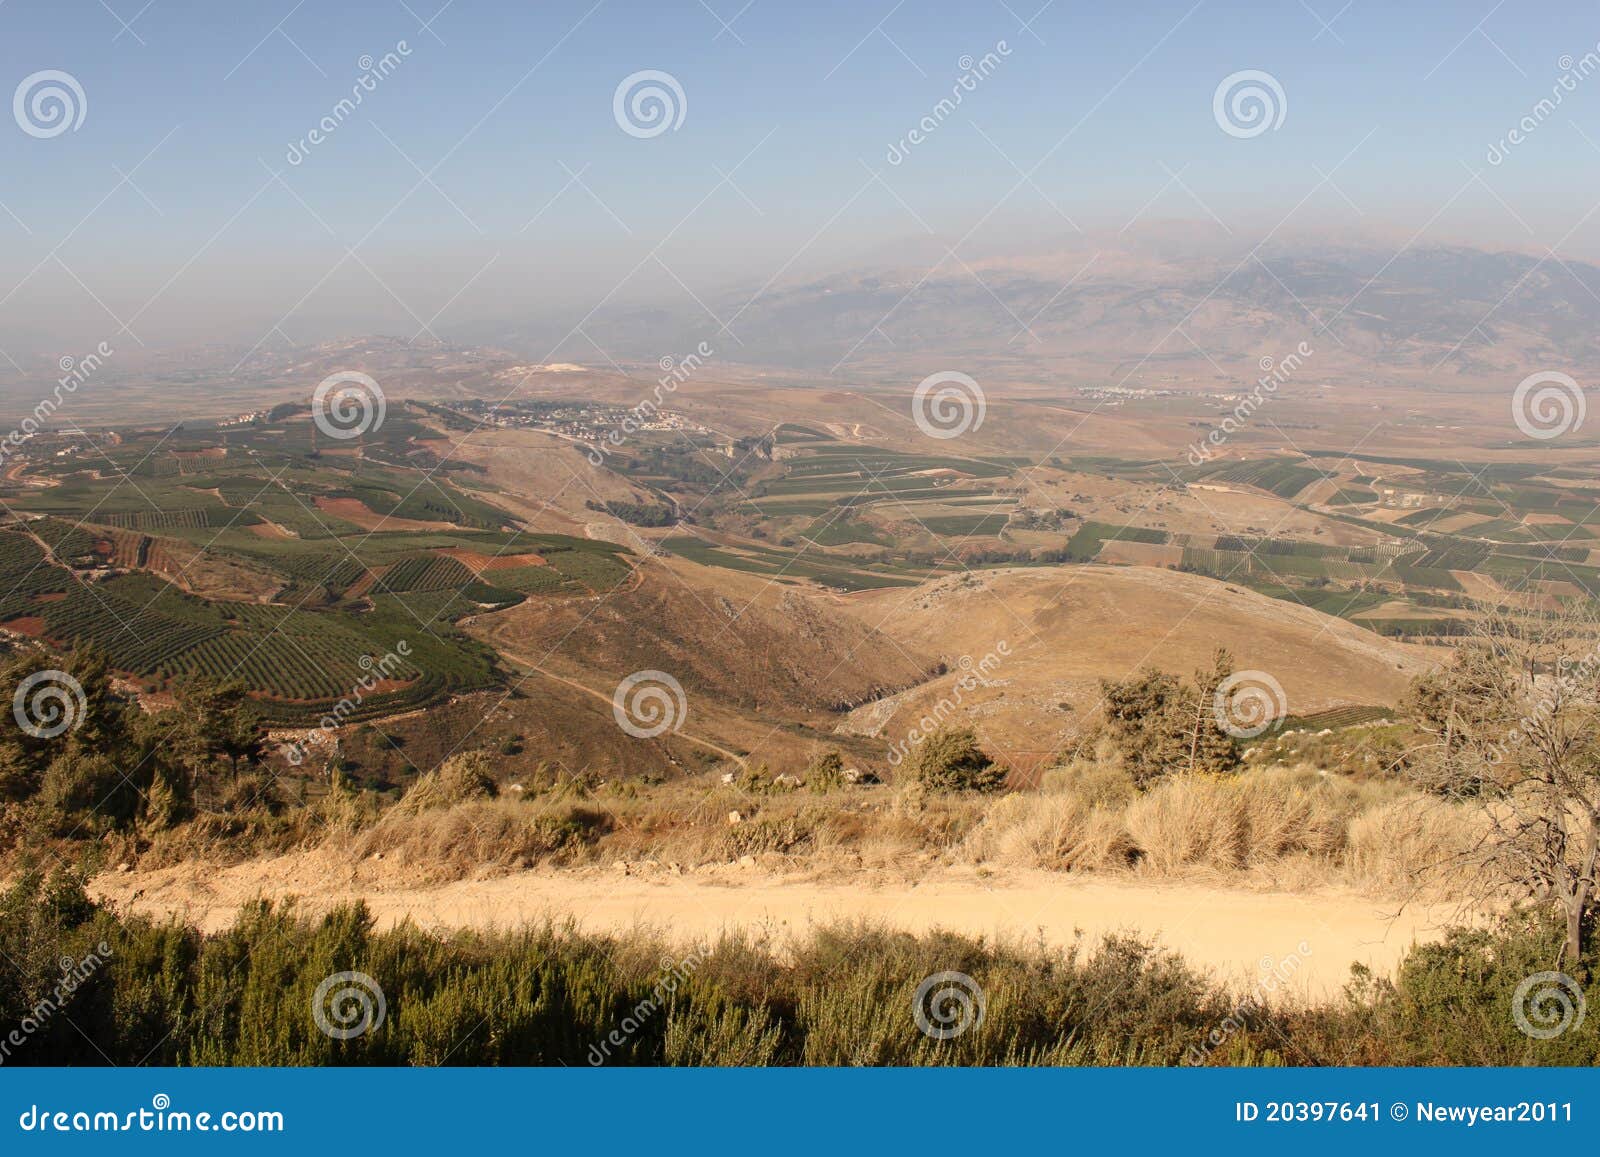 golan heights, galilee, israel